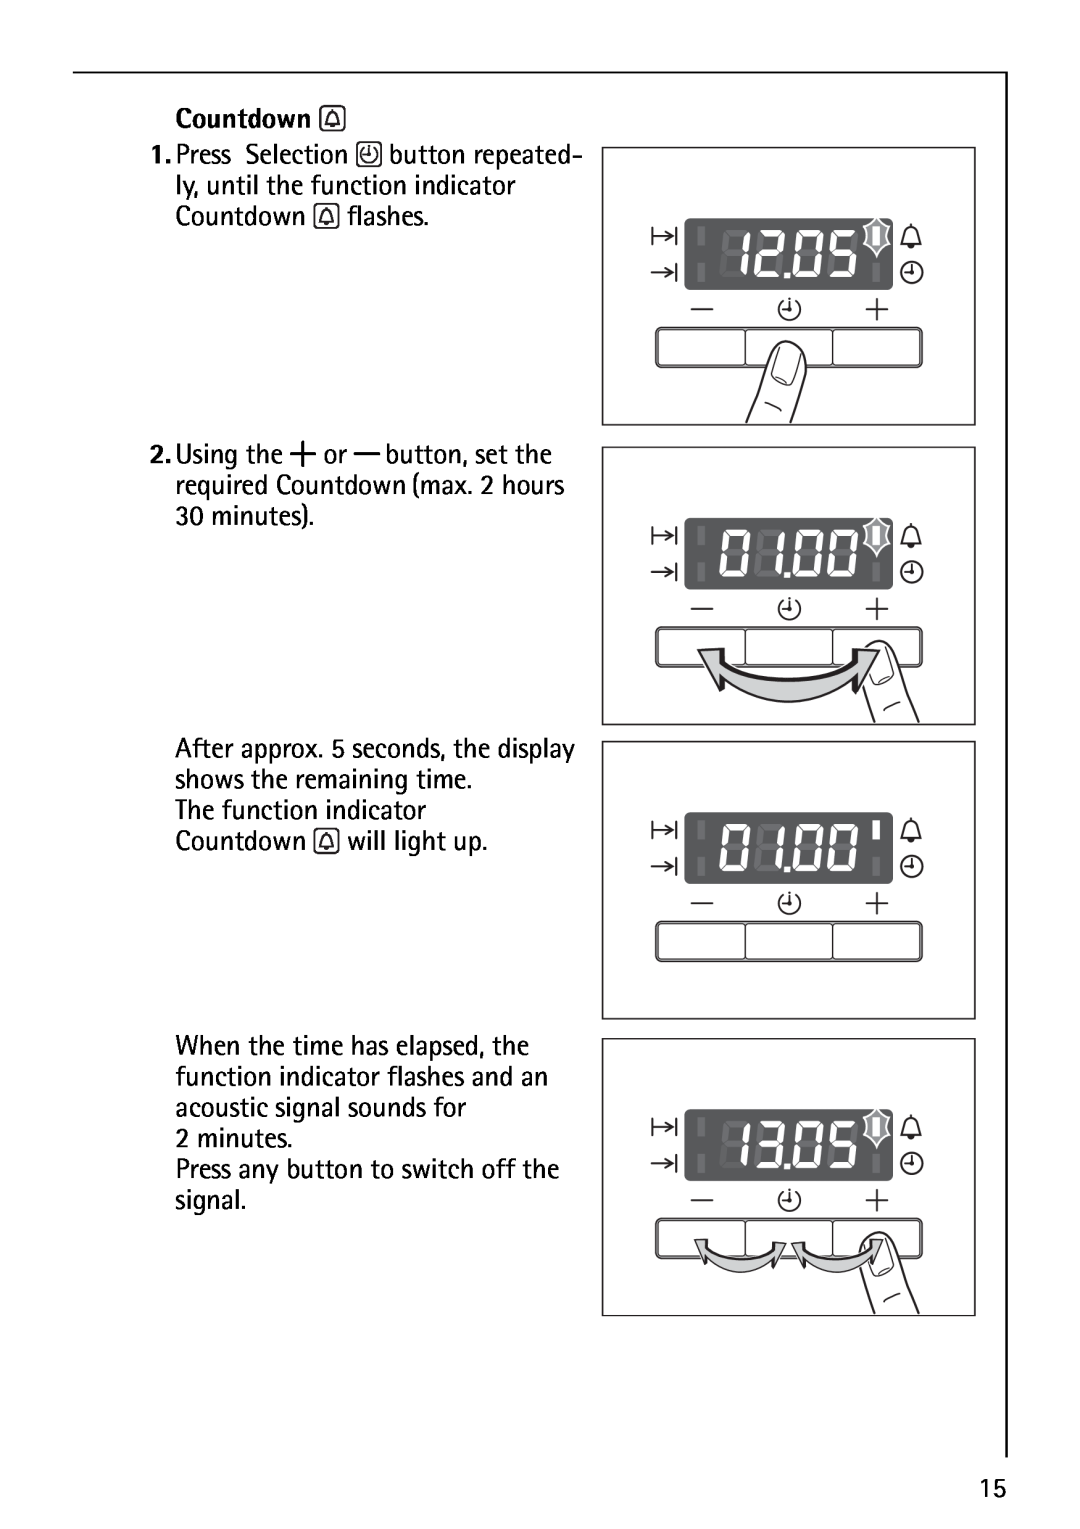 AEG B1180-4 manual Countdown, minutes 